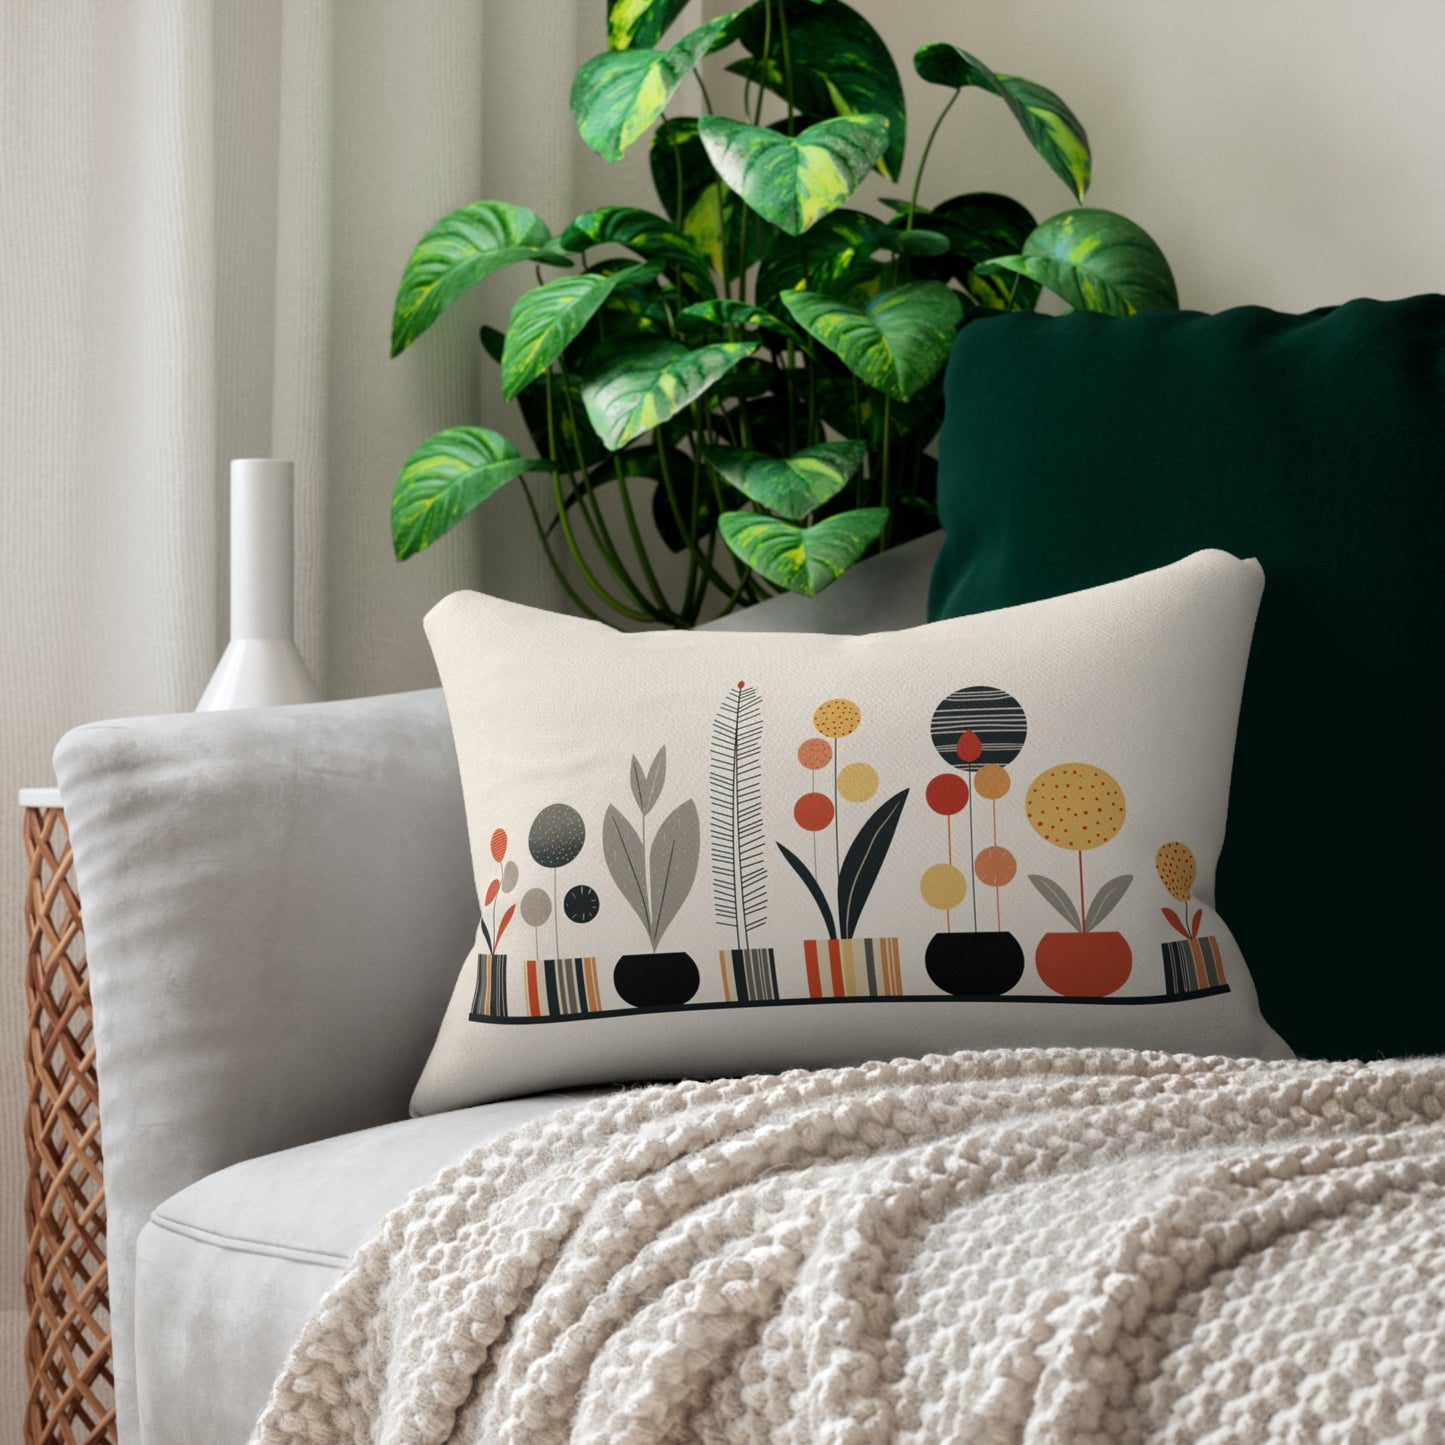 Minimalist Potted Plants Lumbar Pillow, Plant Lover Throw Pillow, Folk Art Plants Cushion, Simple Plants Decorative Pillow, Concealed Zipper